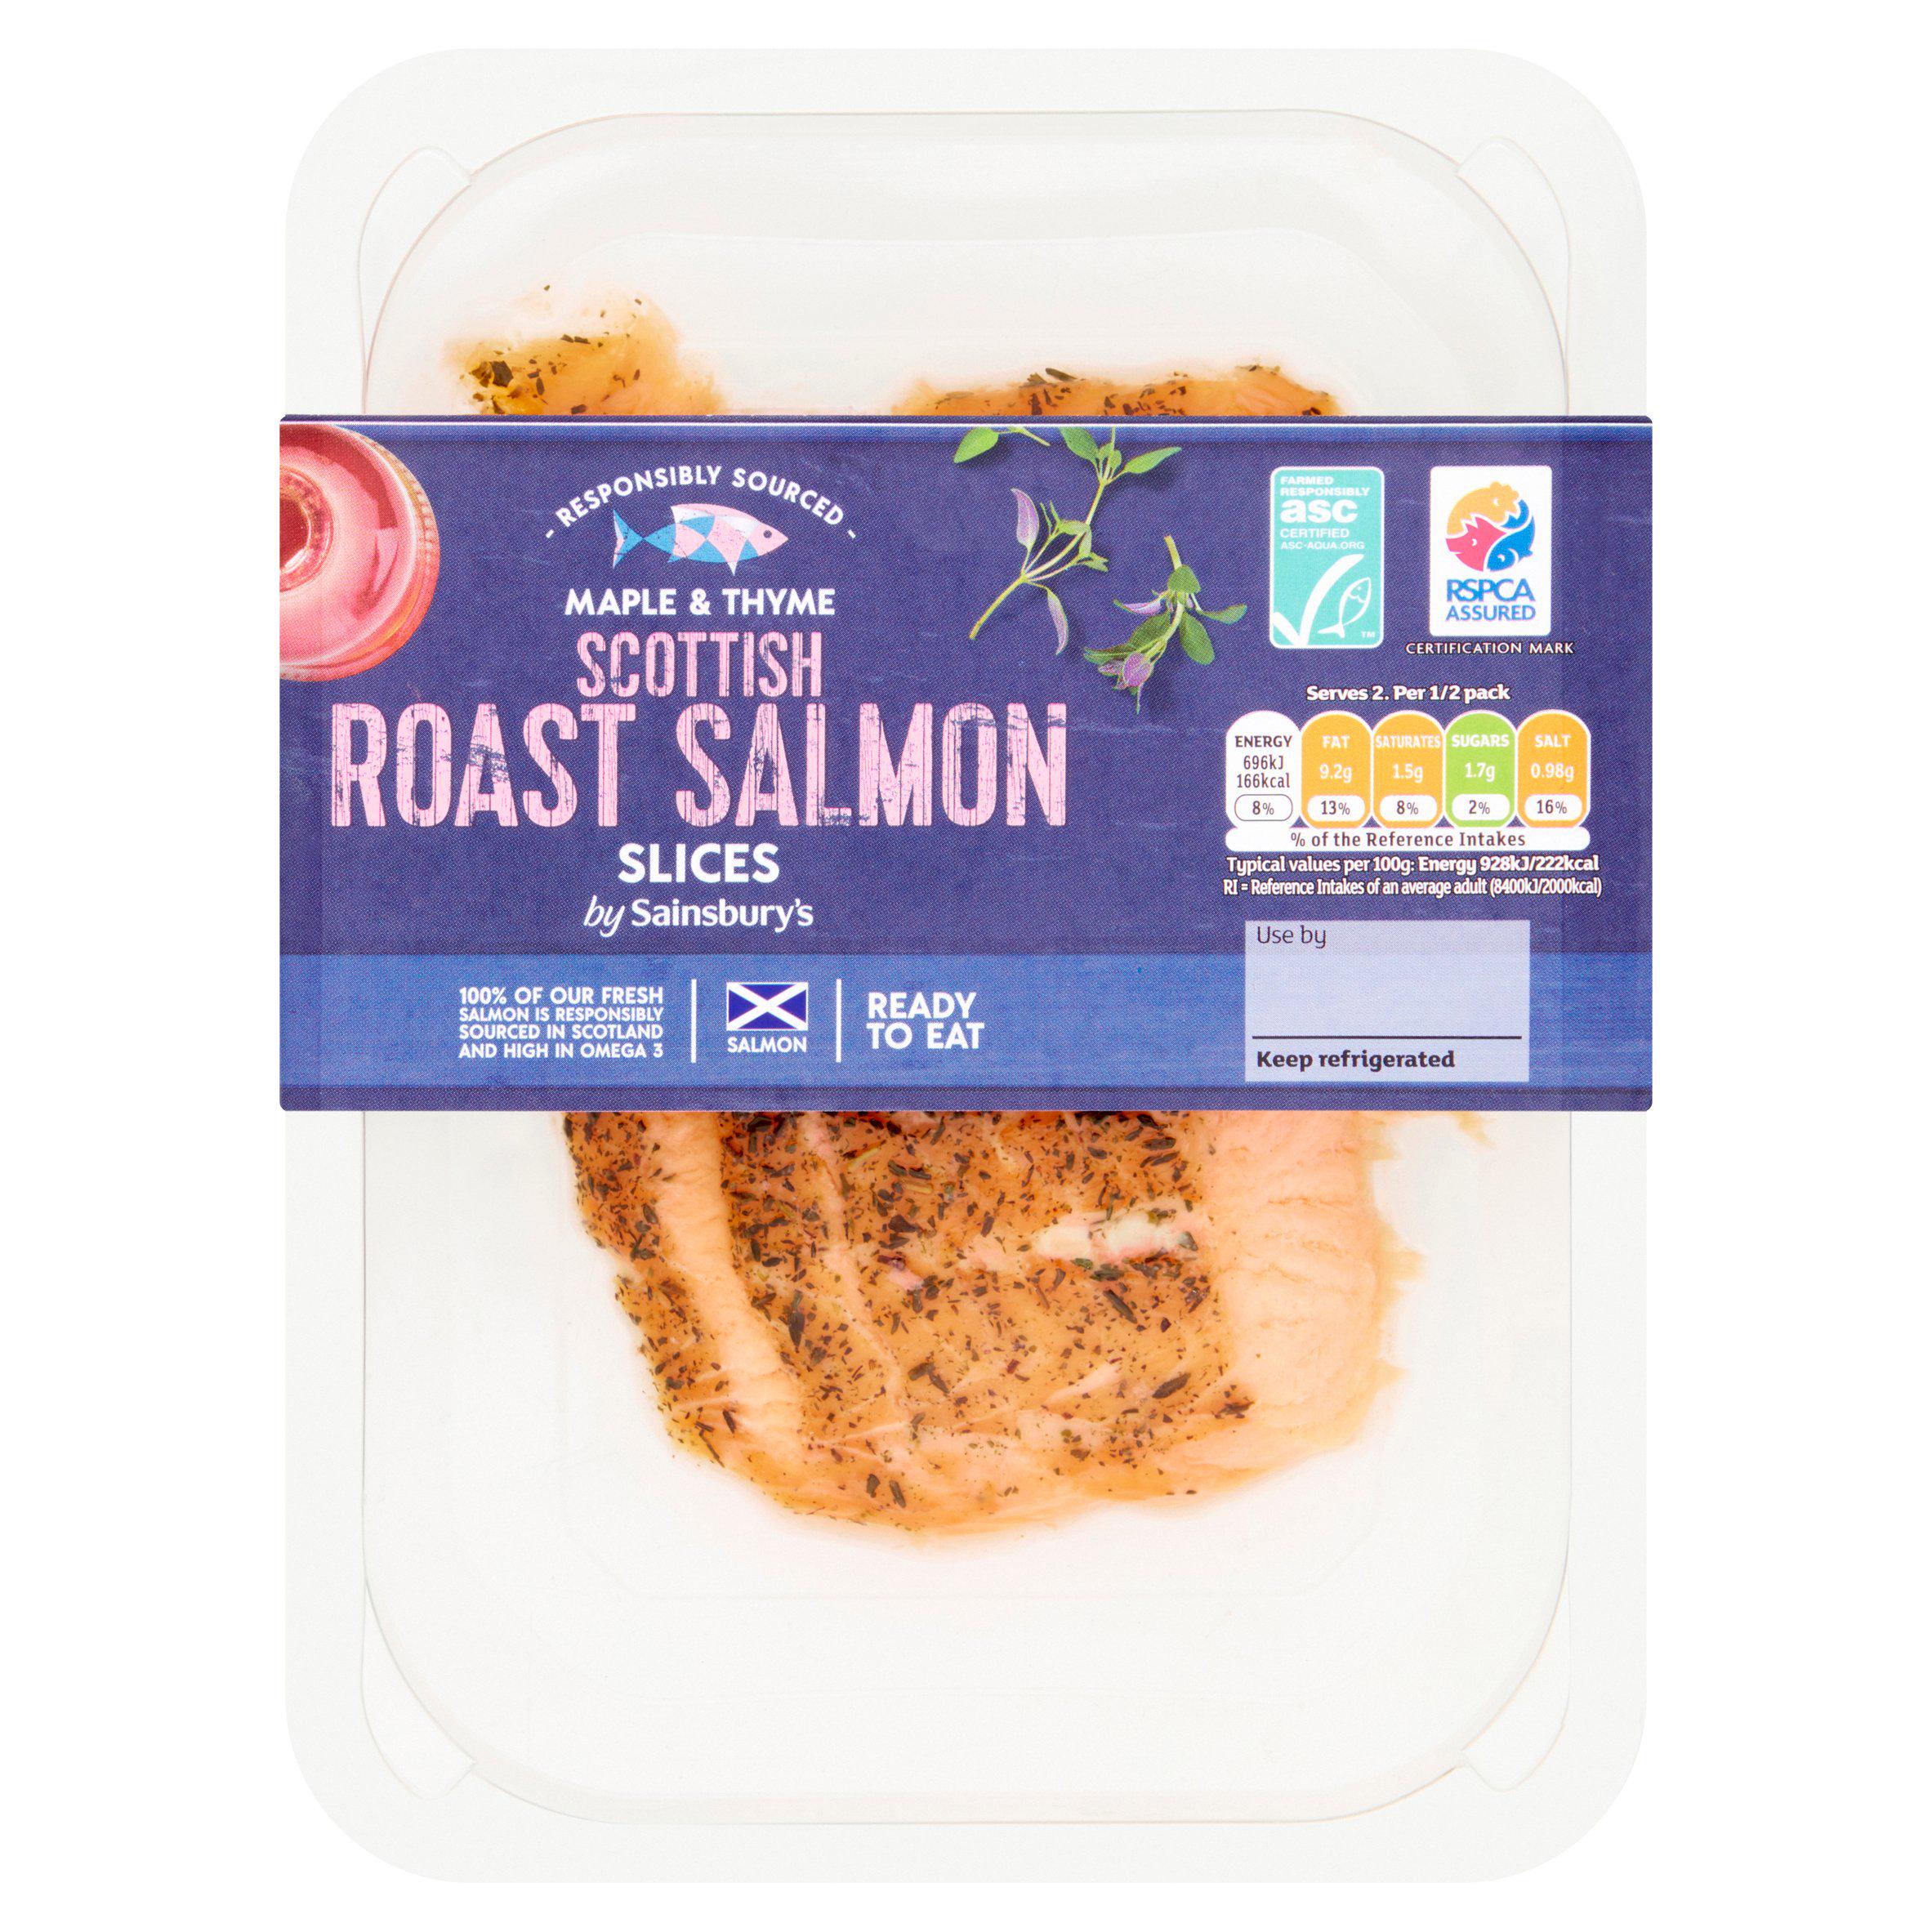 Sainsbury's Roast ASC Scottish Smoked Salmon Slices Marinated with Maple Syrup & Thyme